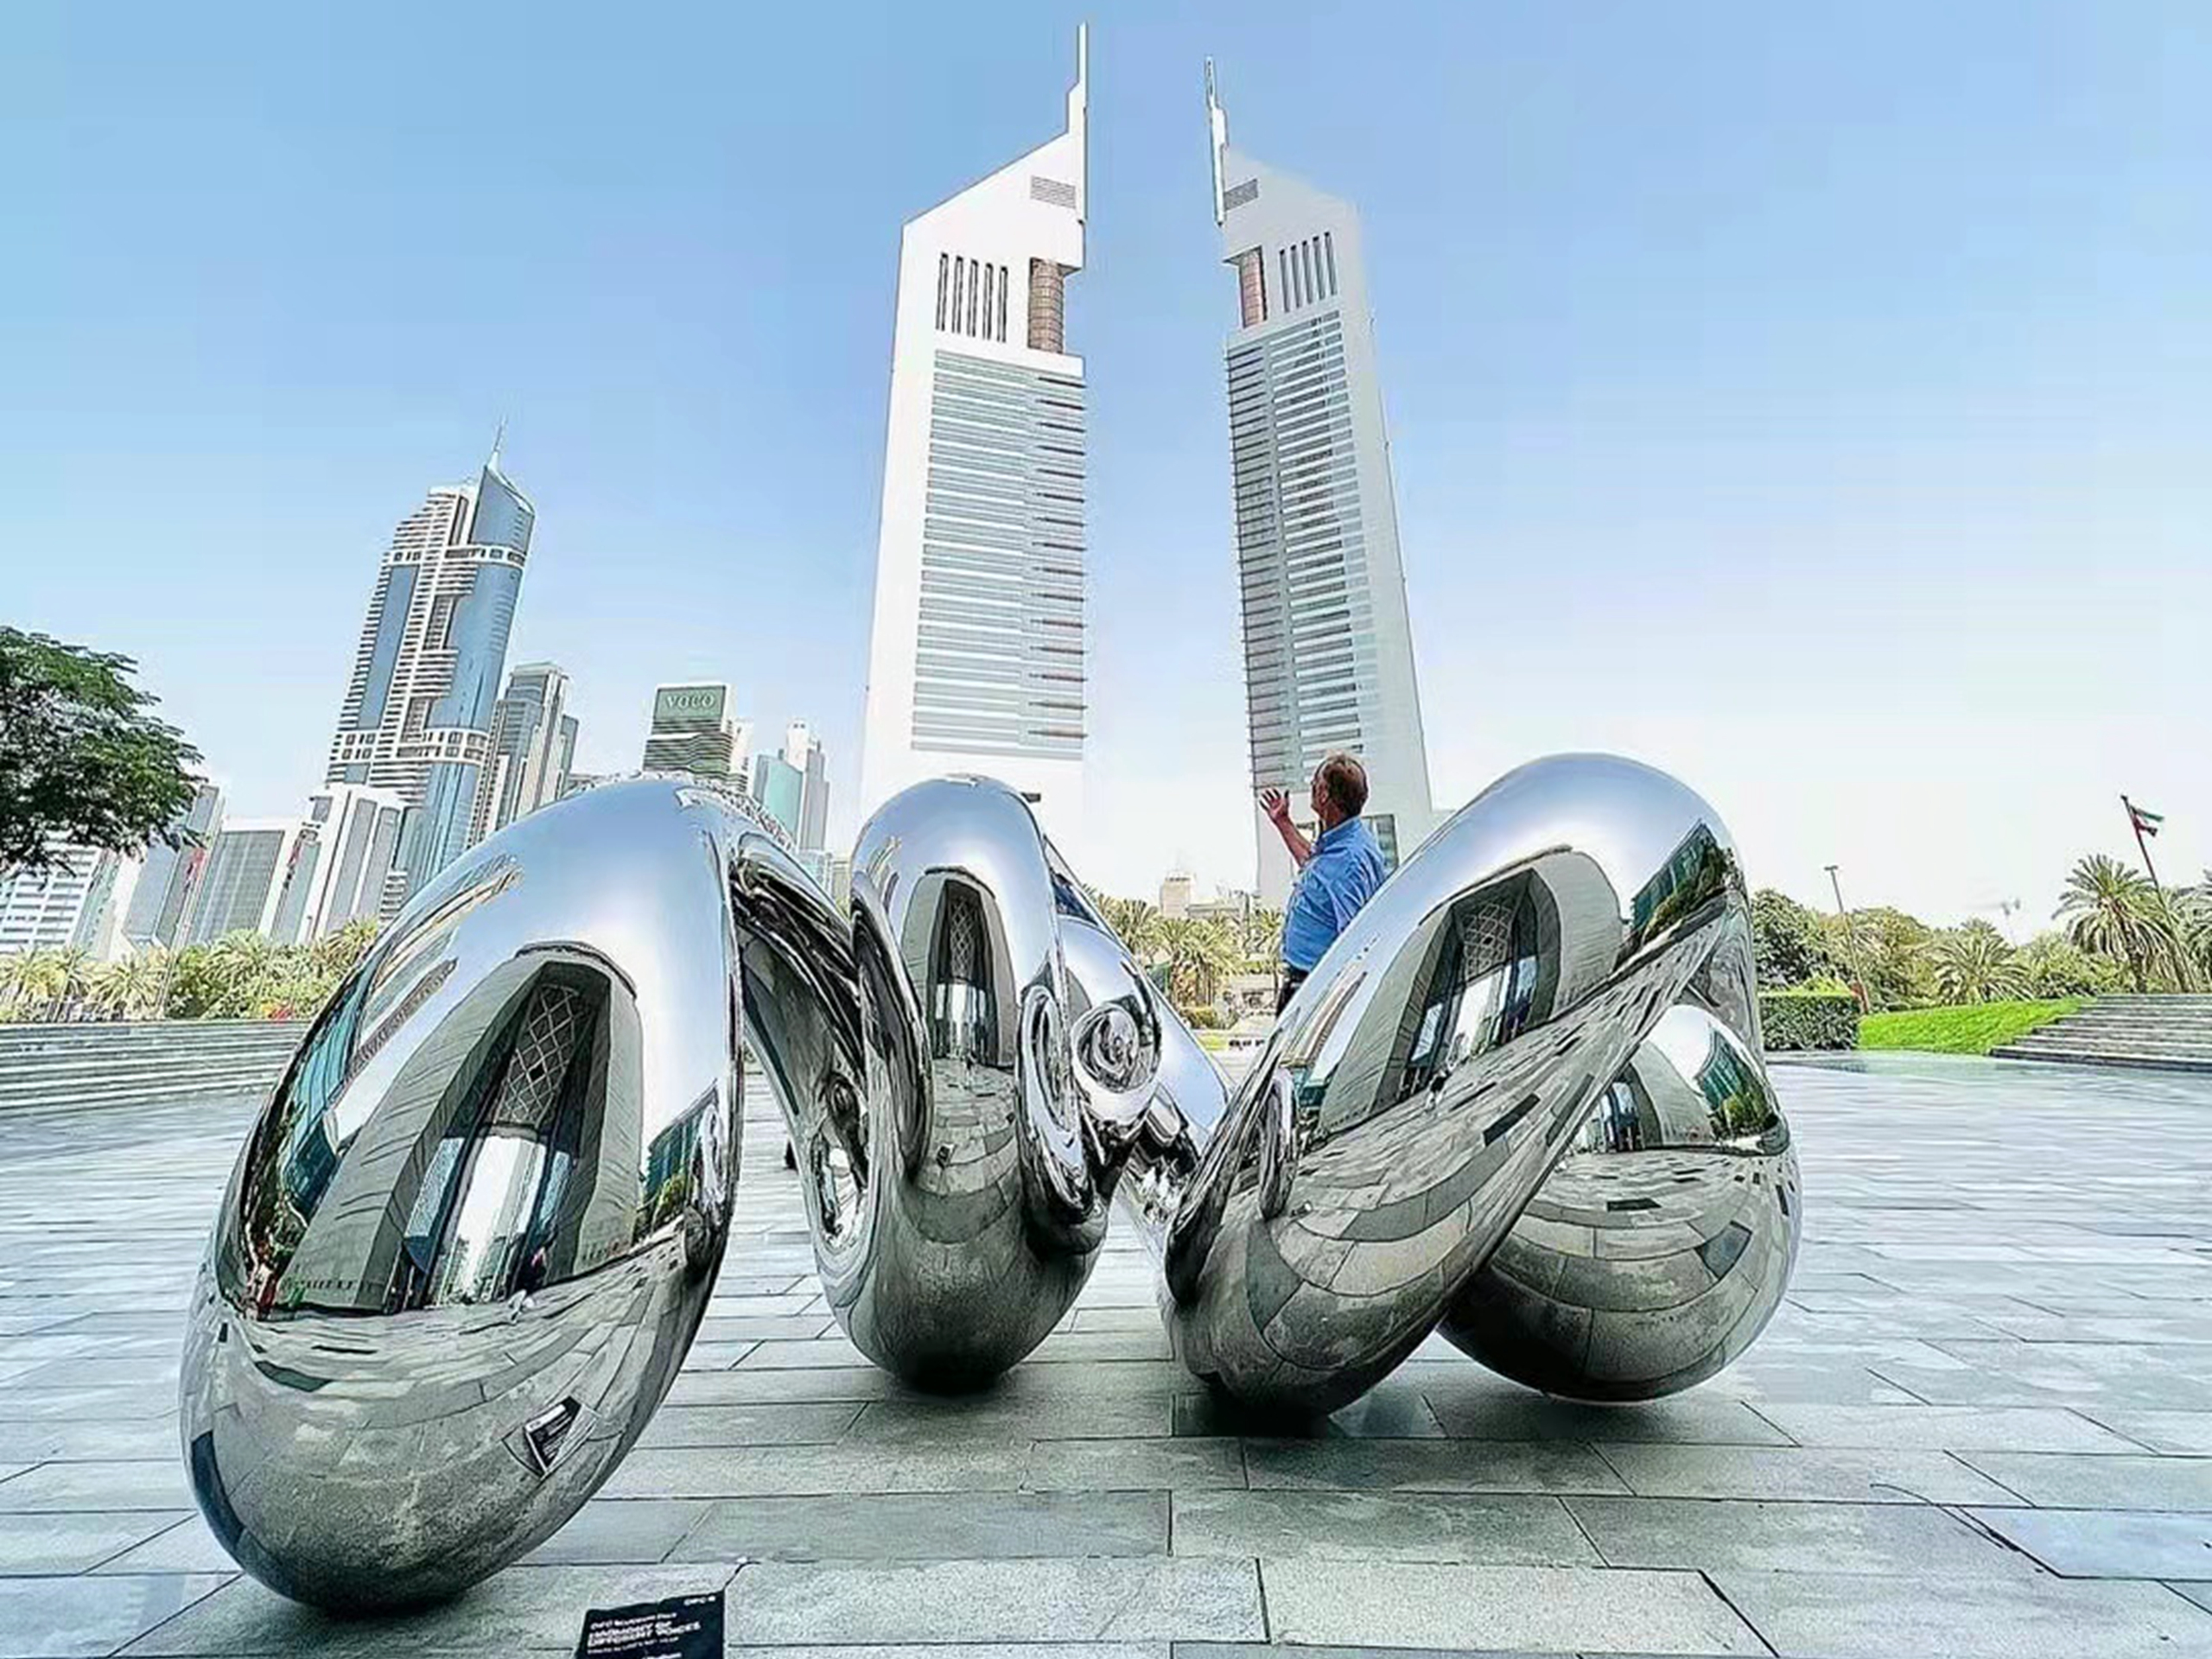 Mirror polishing stainless steel Unwind sculpture in Dubai